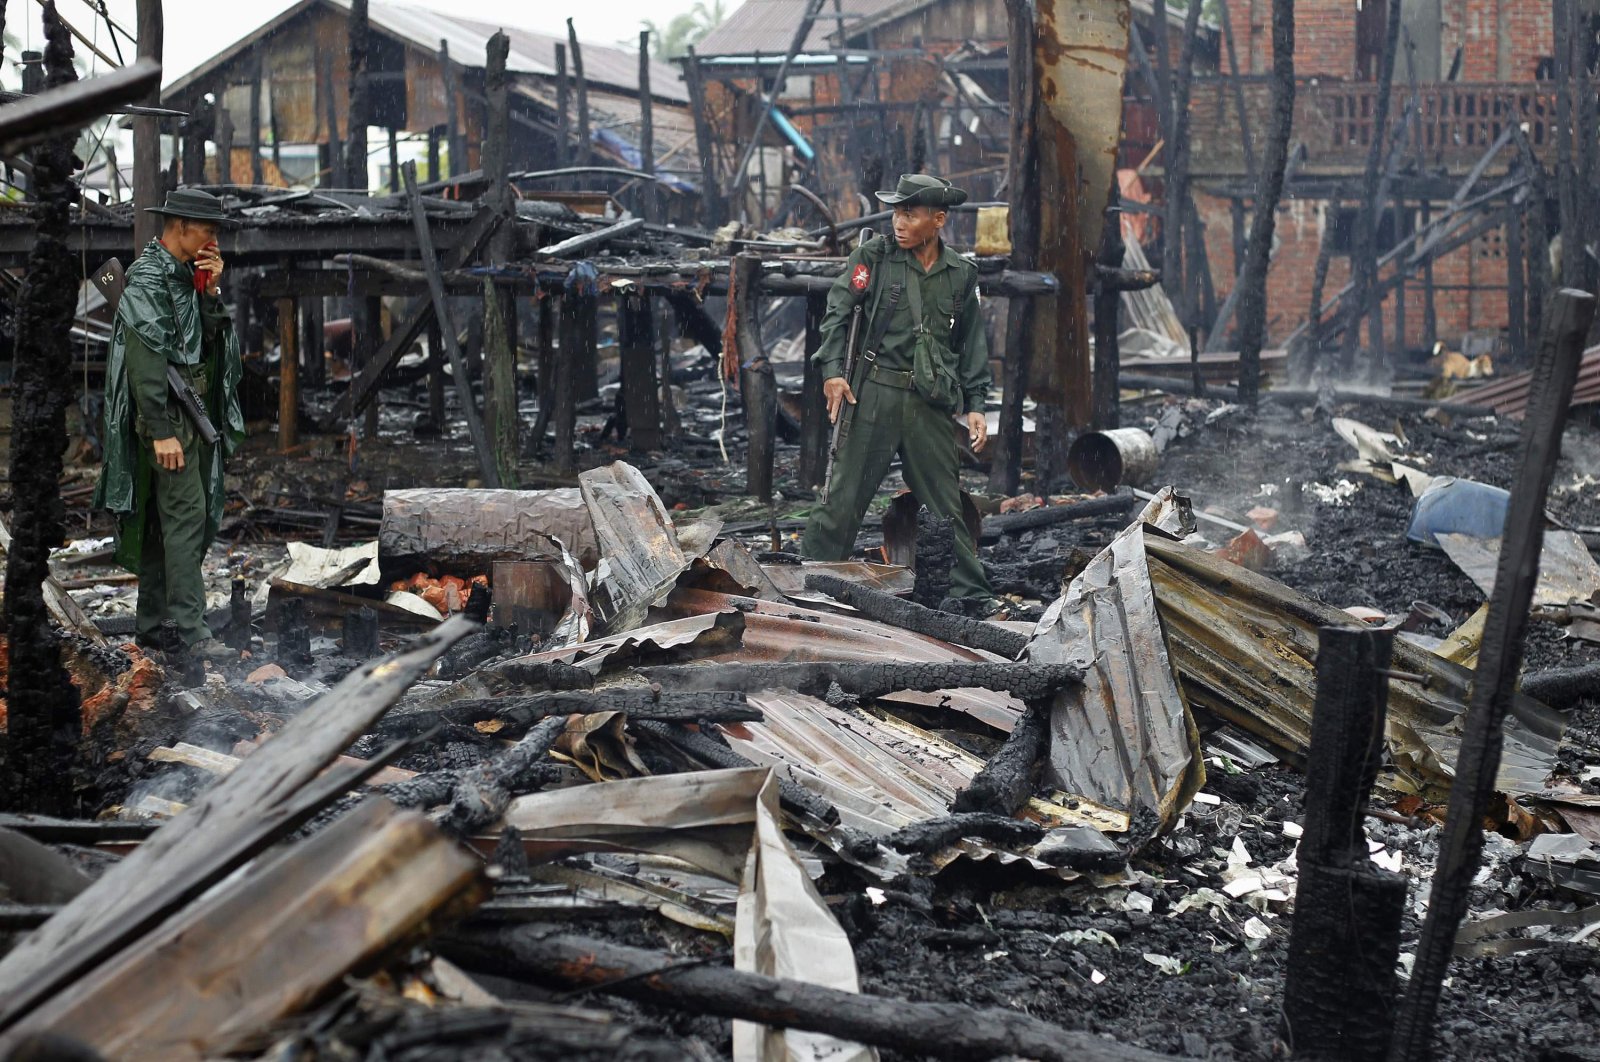 Soldiers patrol through a neighborhood burned in recent violence, Sittwe June 15, 2012. (REUTERS Photo)